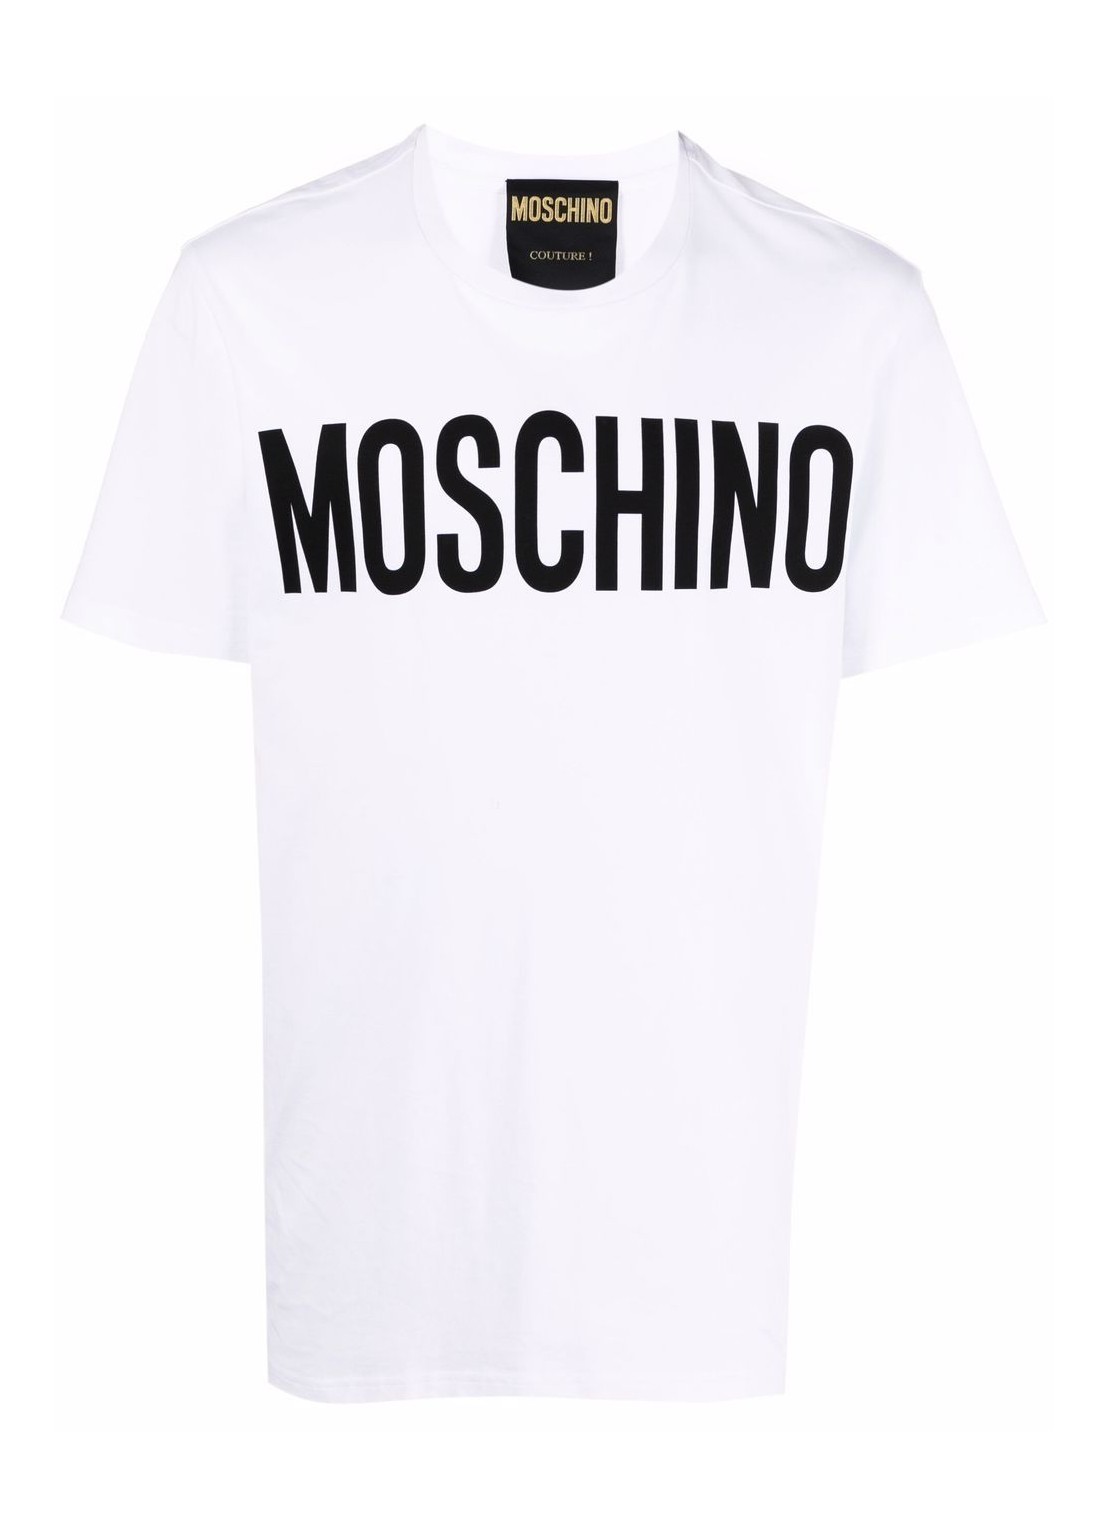 Camiseta moschino couture organic cotton jersey - 07012041 a1001 talla 46
 